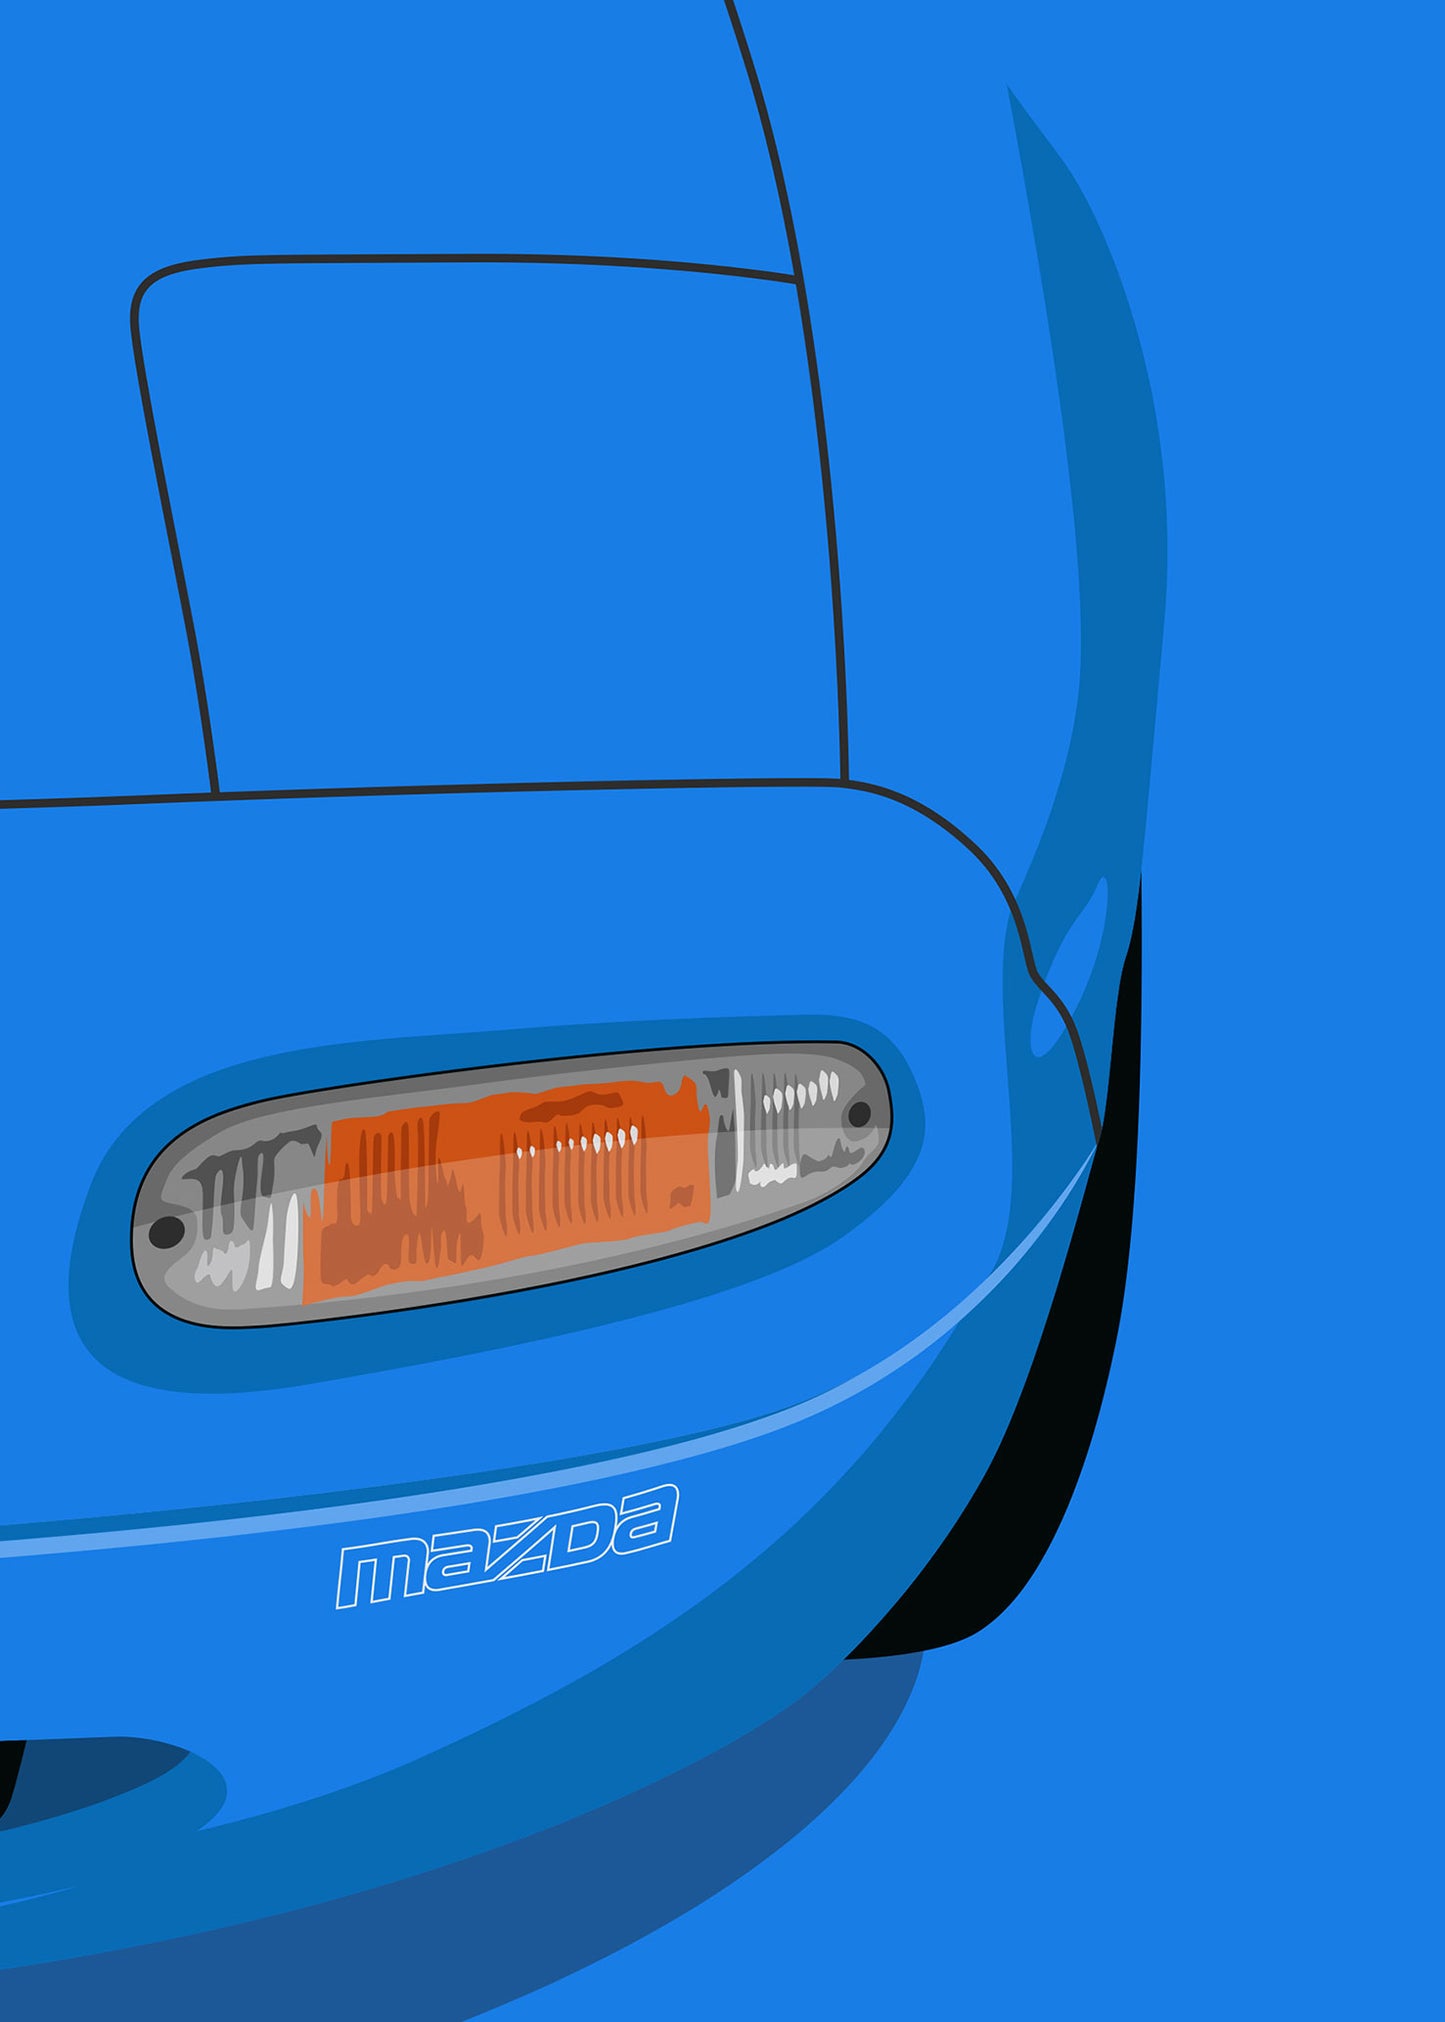 1990 Mazda MX5 Mk1 - Mariner Blue - poster print